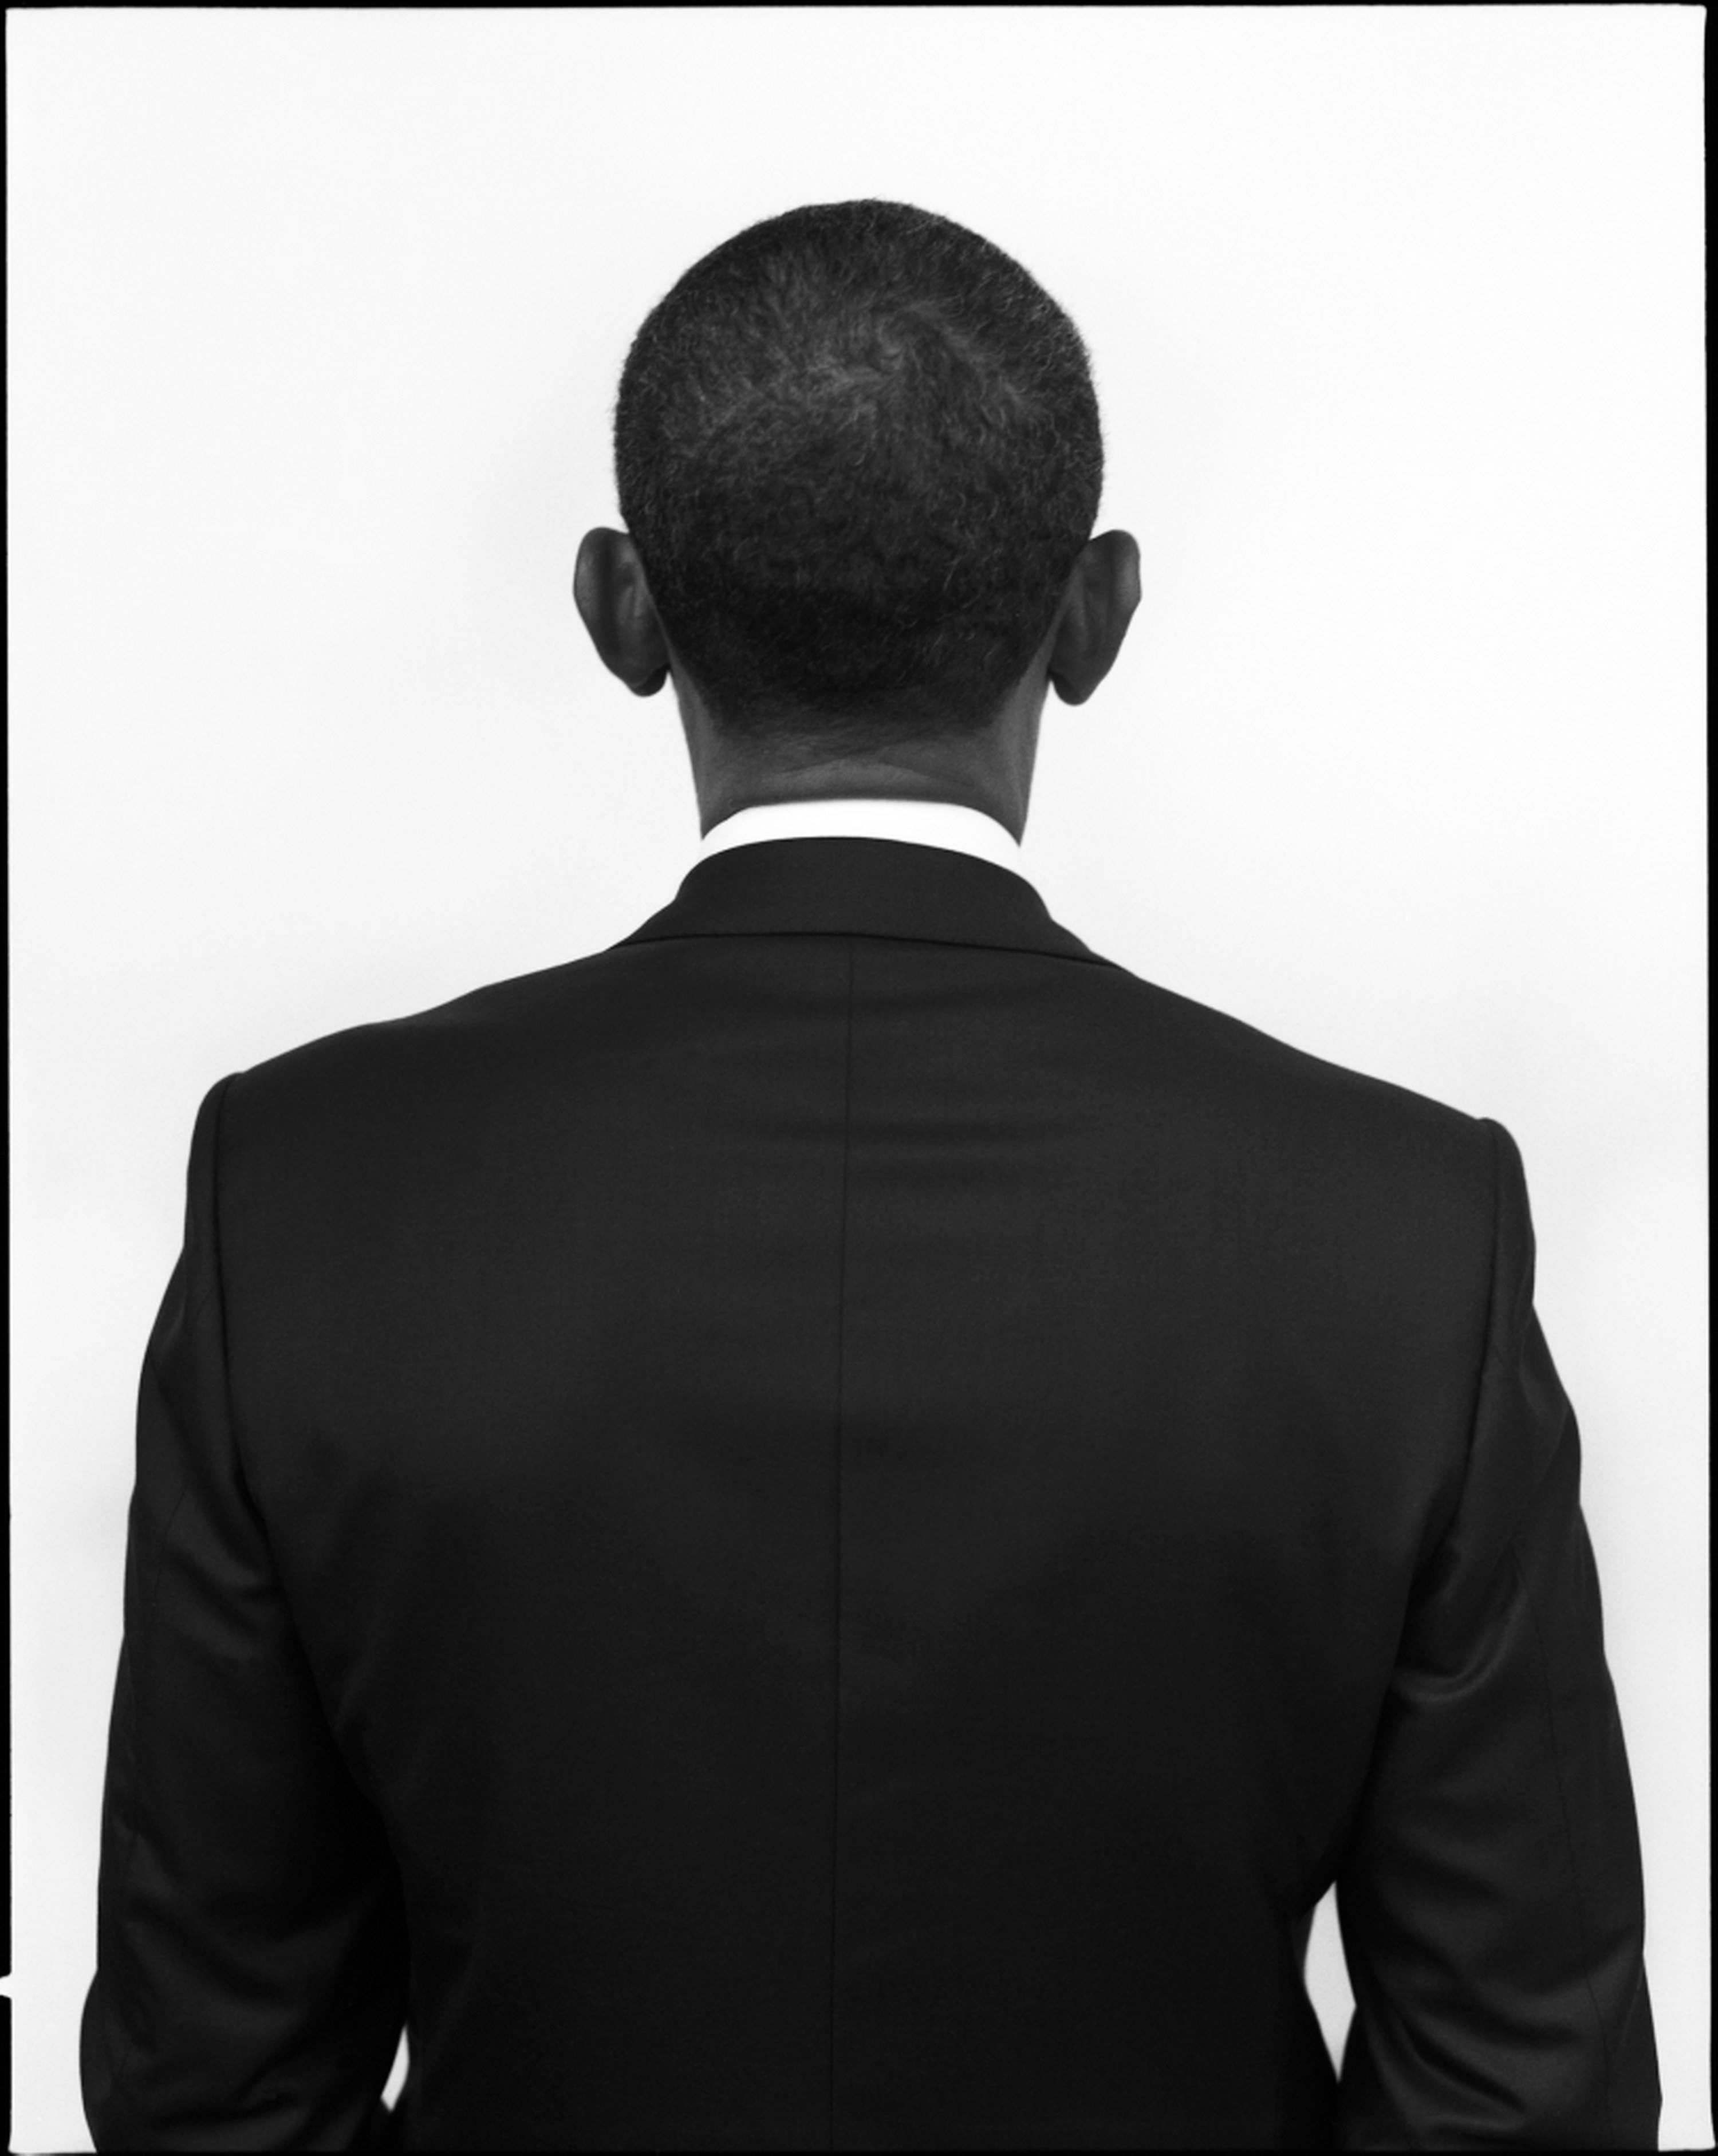 Mark Seliger Black and White Photograph - Barack Obama